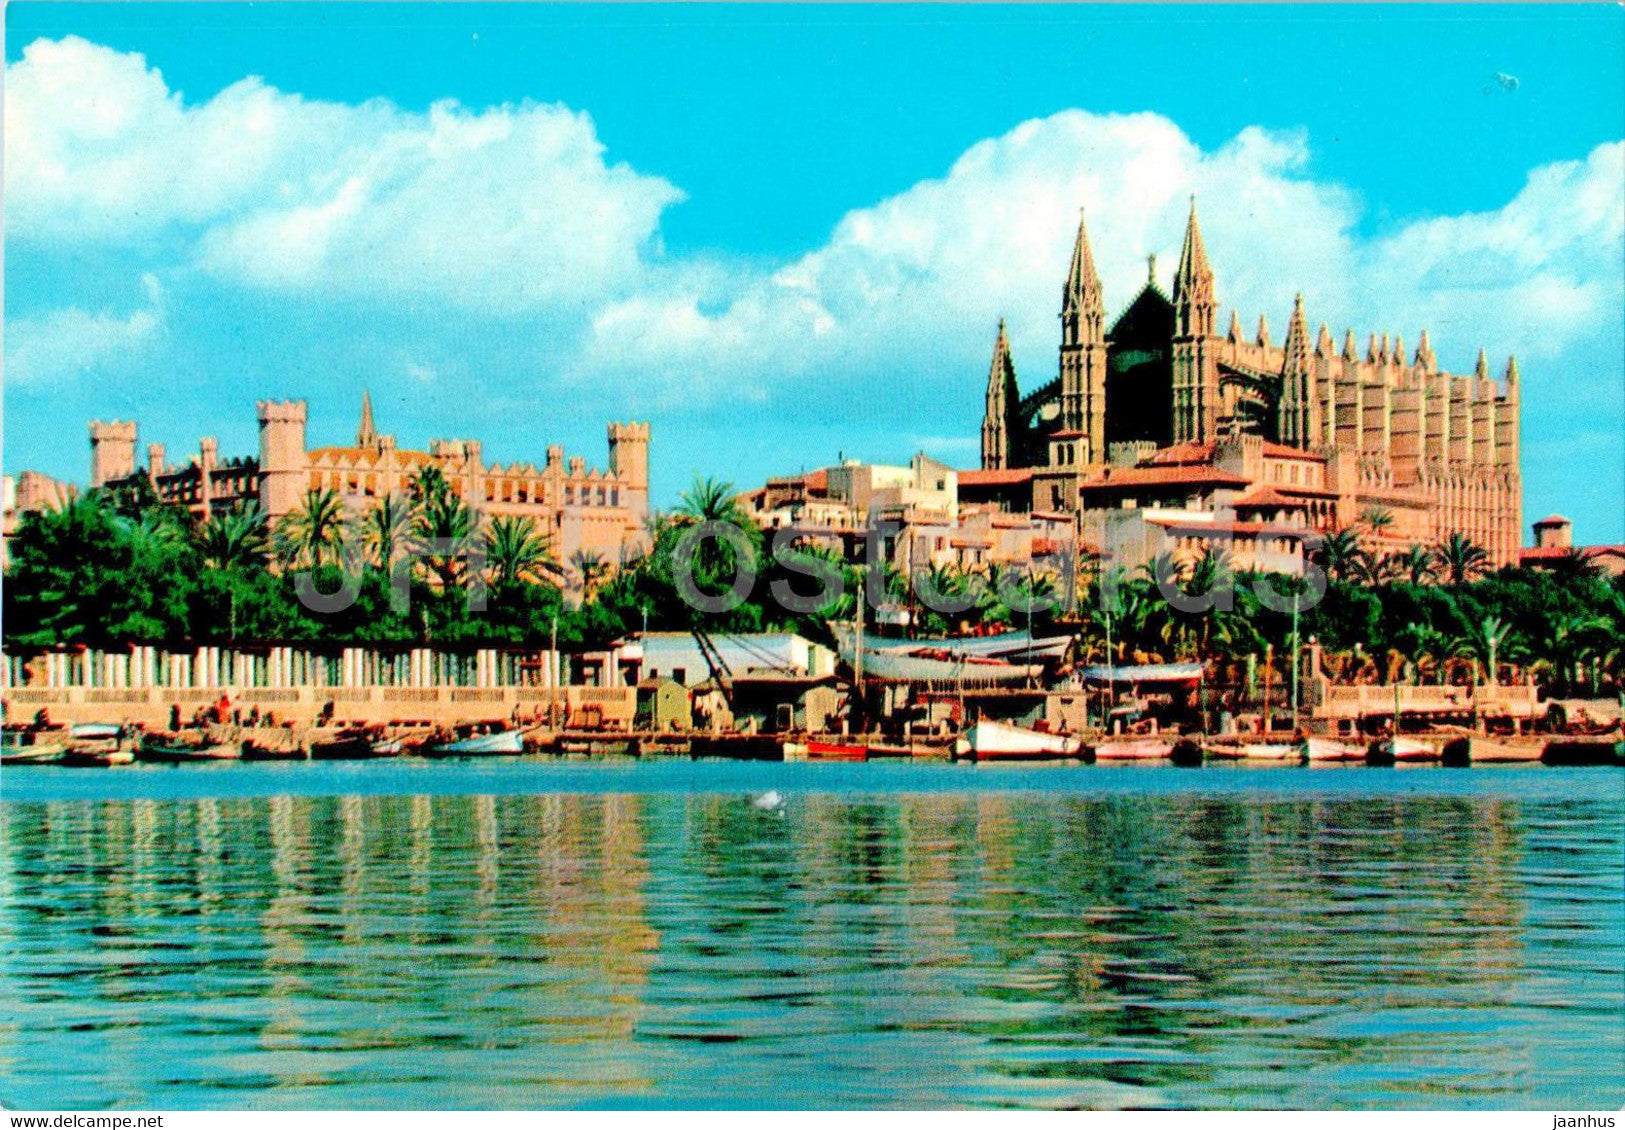 Palma - La Catedral y La Lonja - cathedral - Mallorca - 1143 - Spain - unused - JH Postcards